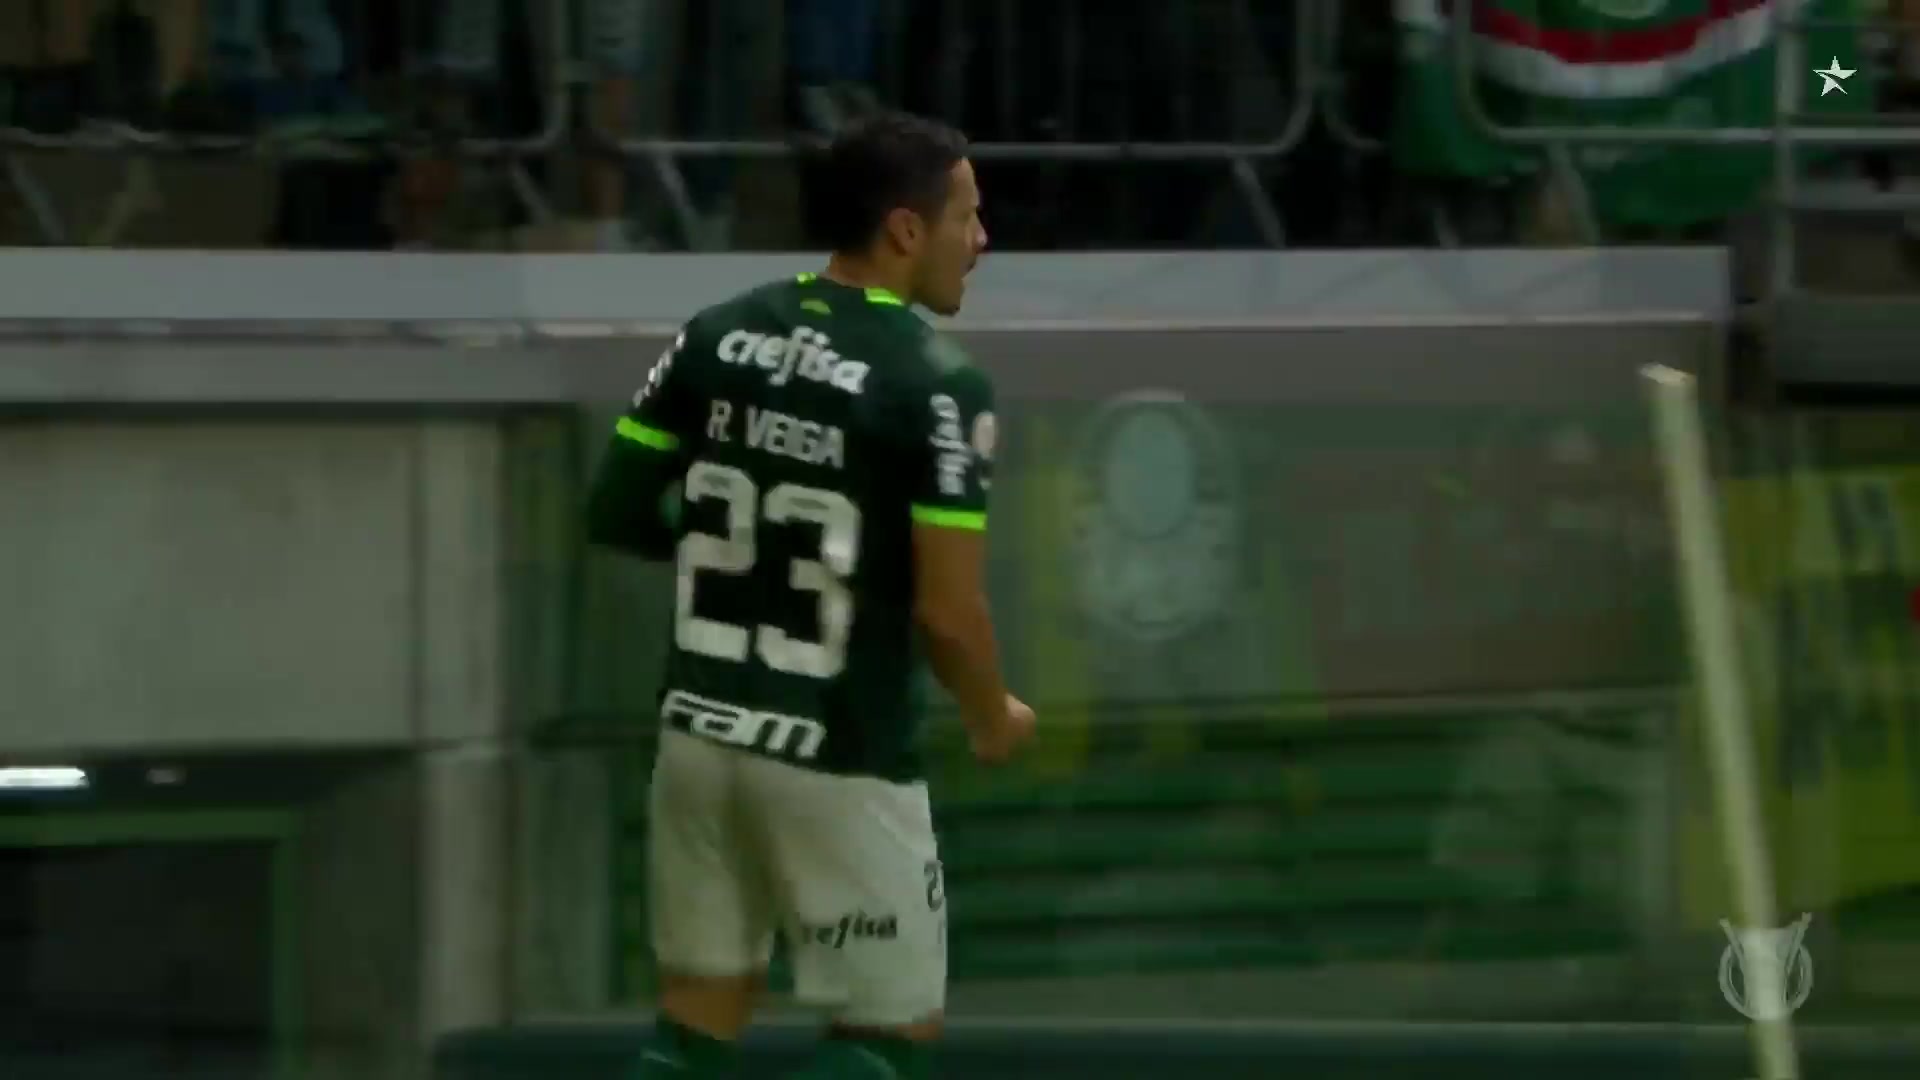 BRA D1 Palmeiras Vs Fortaleza  Goal in 75 min, Score 2:1